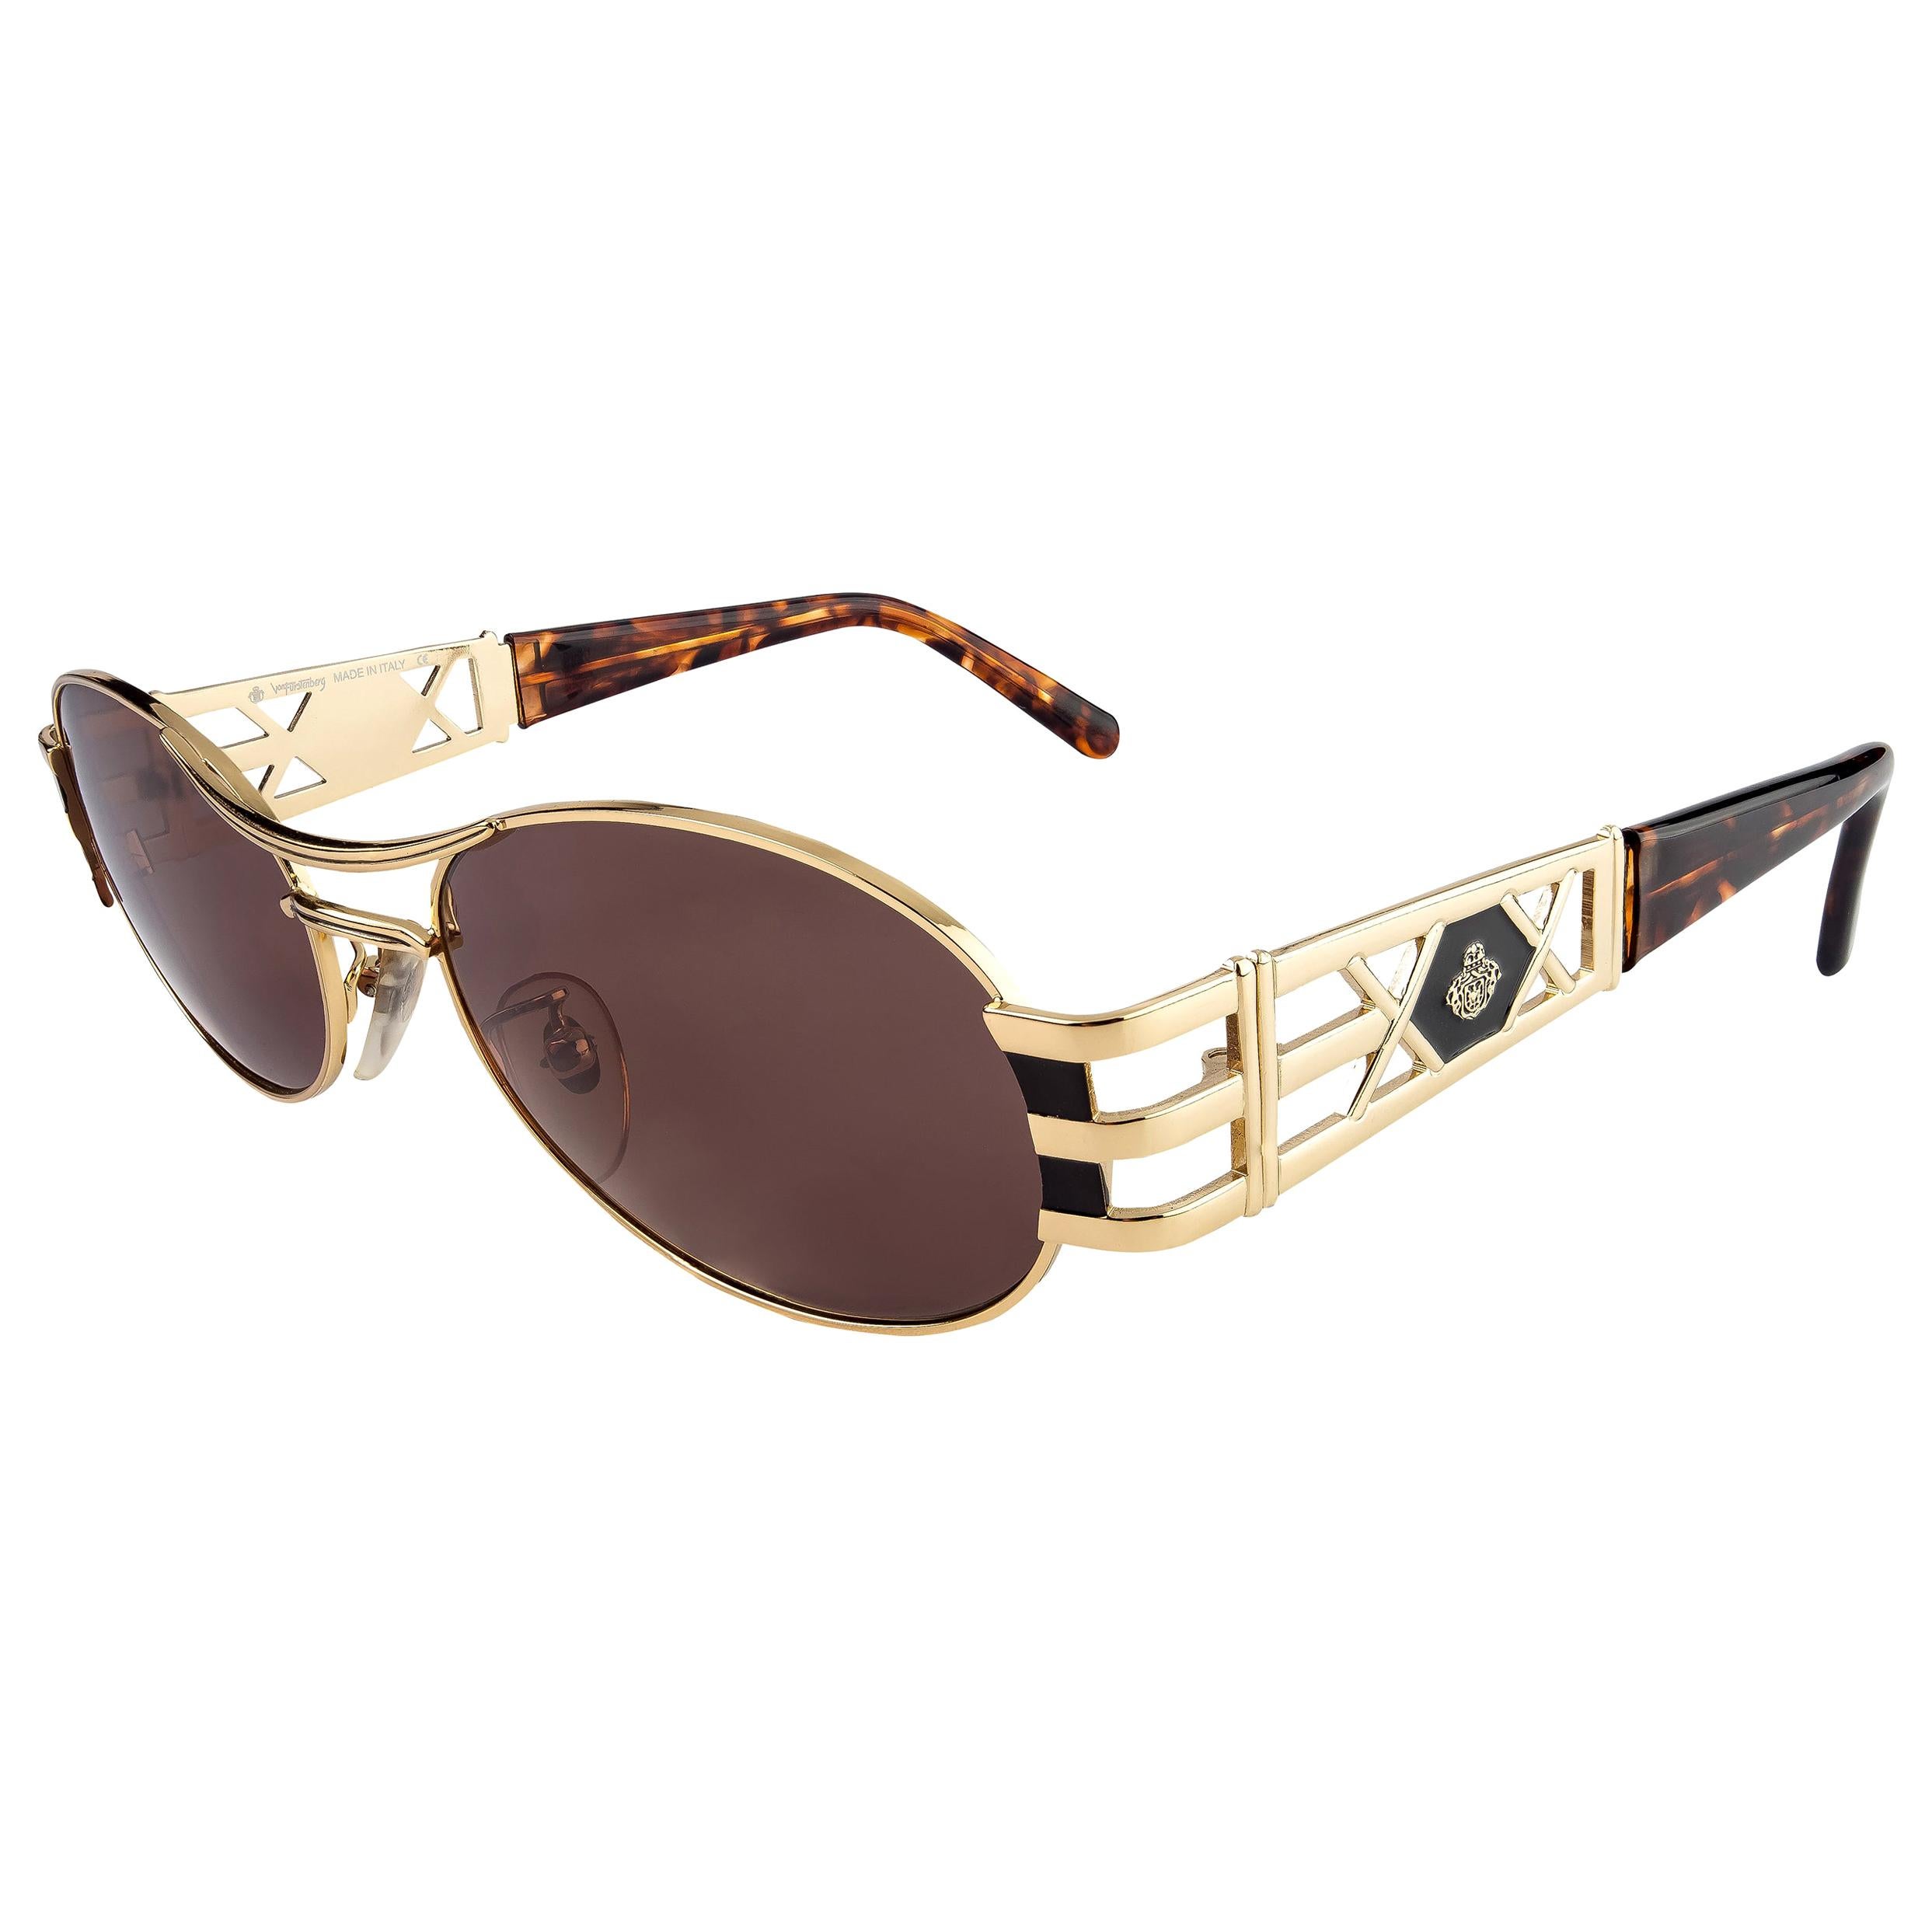 Prince Egon von Furstenberg vintage sunglasses 80s